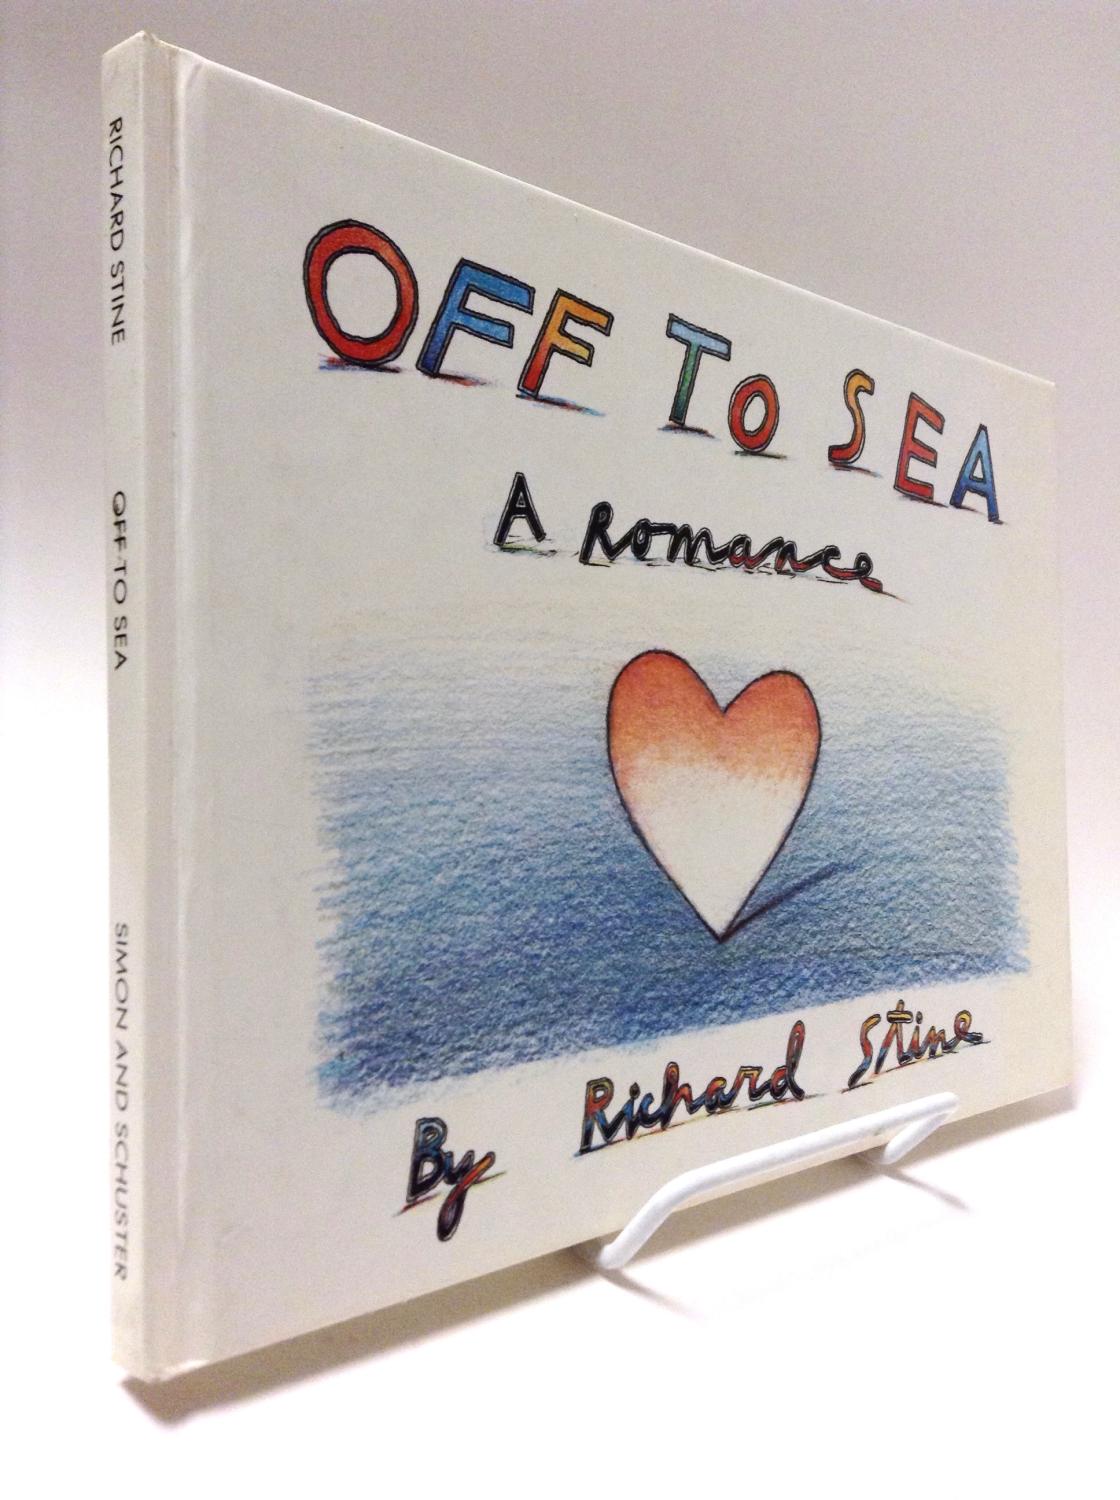 Off To Sea: A Romance by Richard Stine